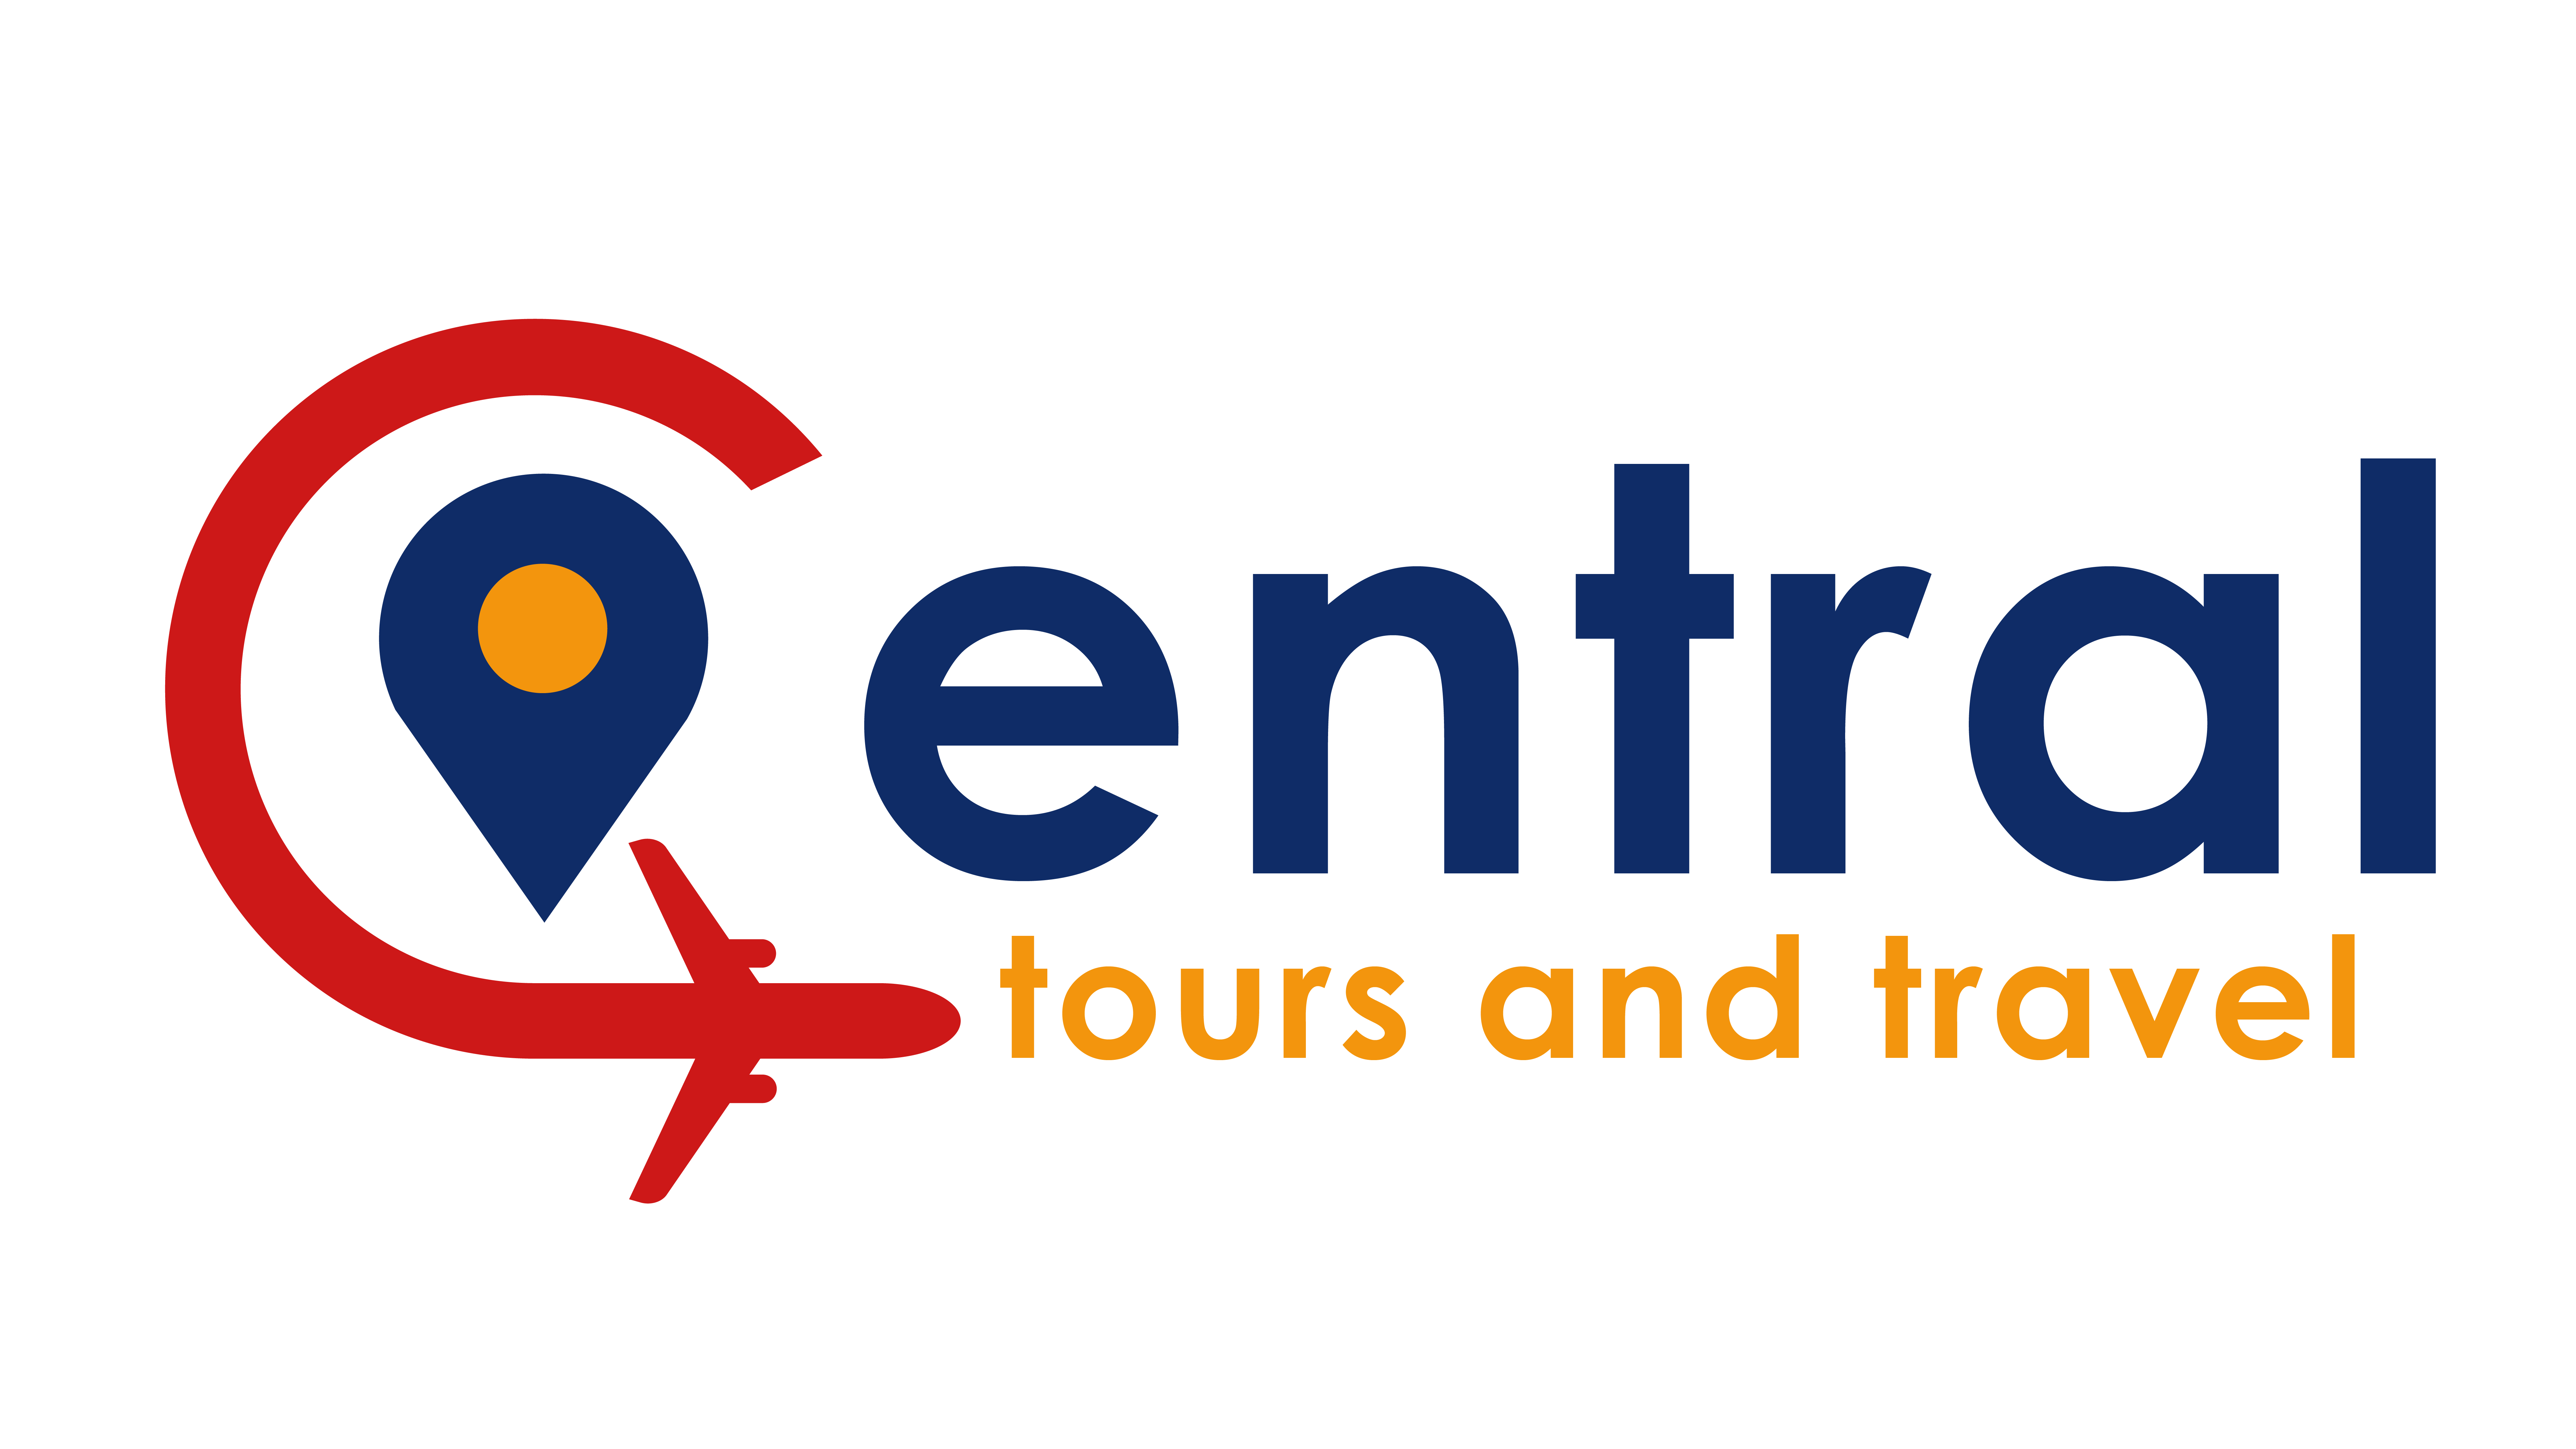 Tours and travel in Armenia, Georgia and Iran